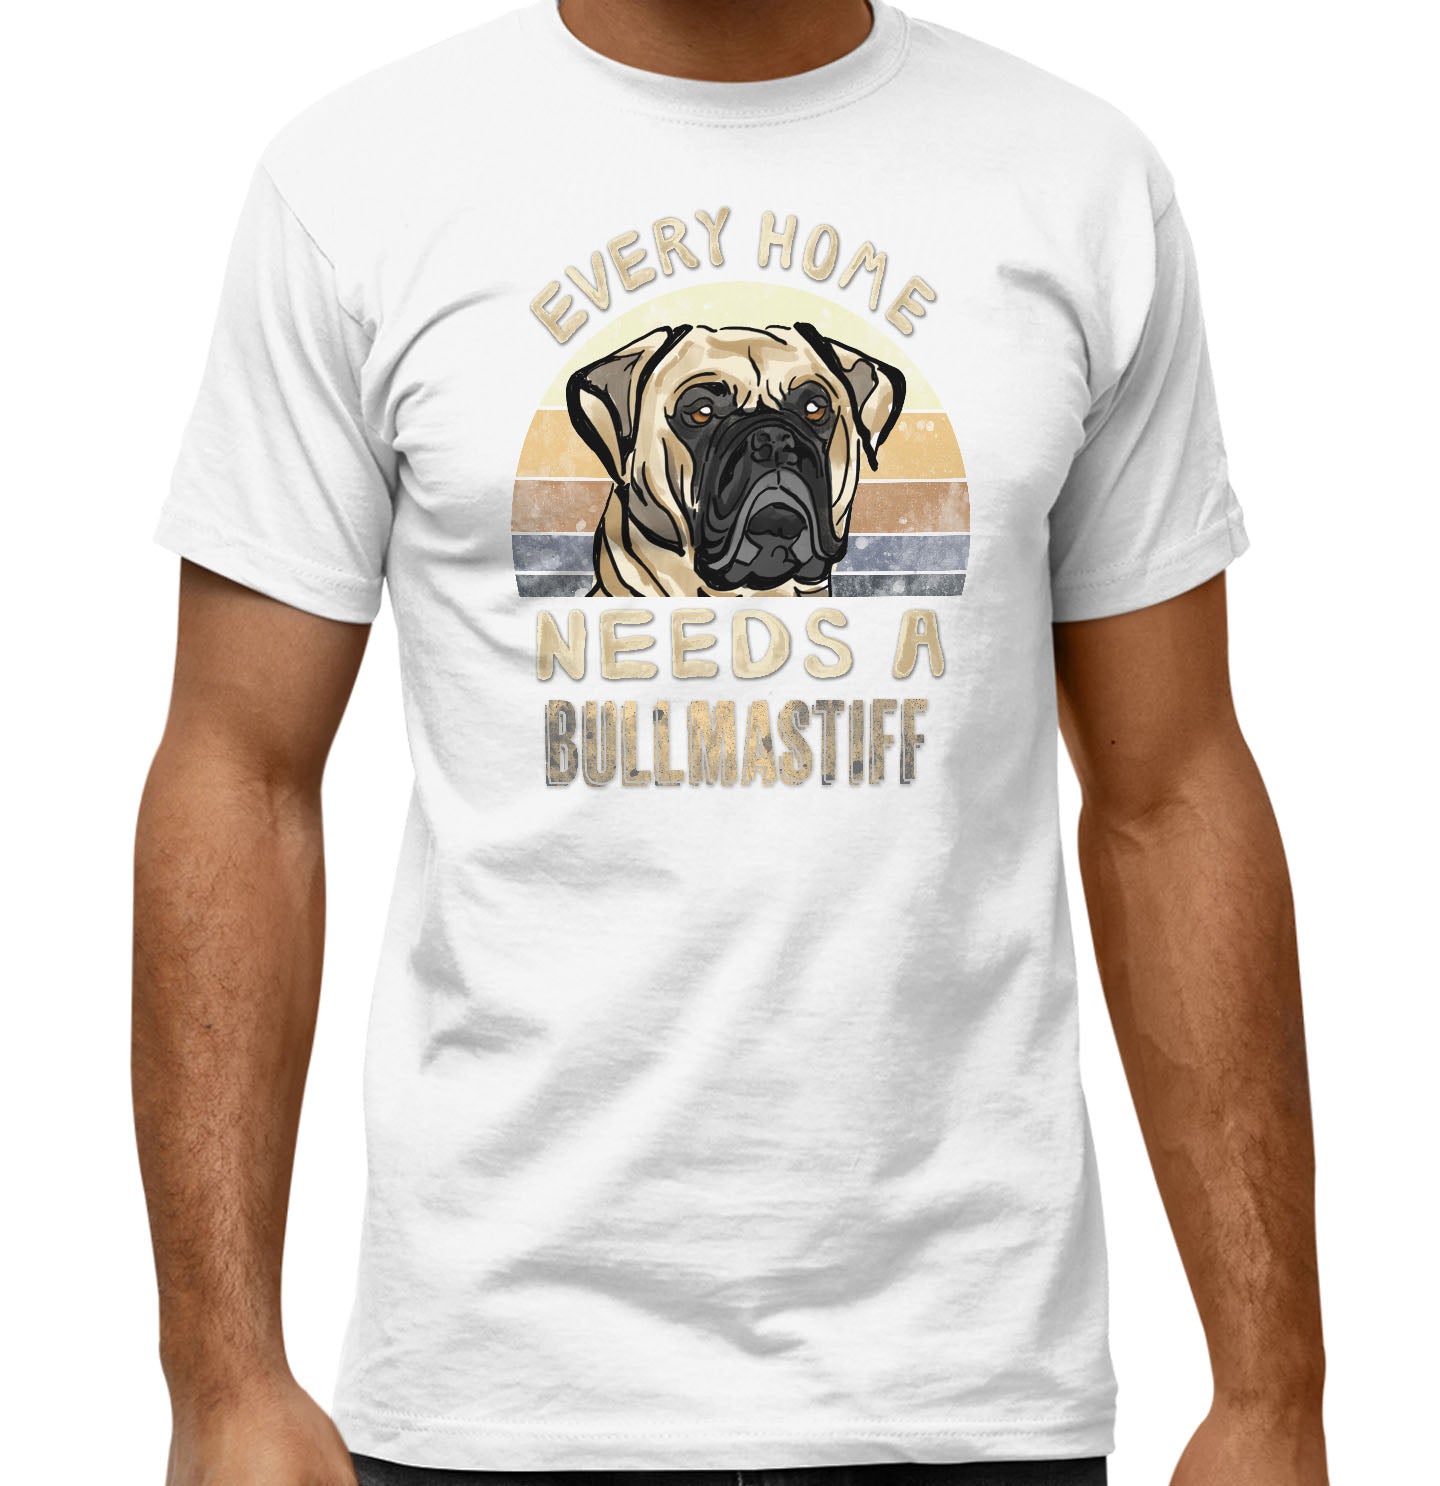 Every Home Needs a Bullmastiff - Adult Unisex T-Shirt